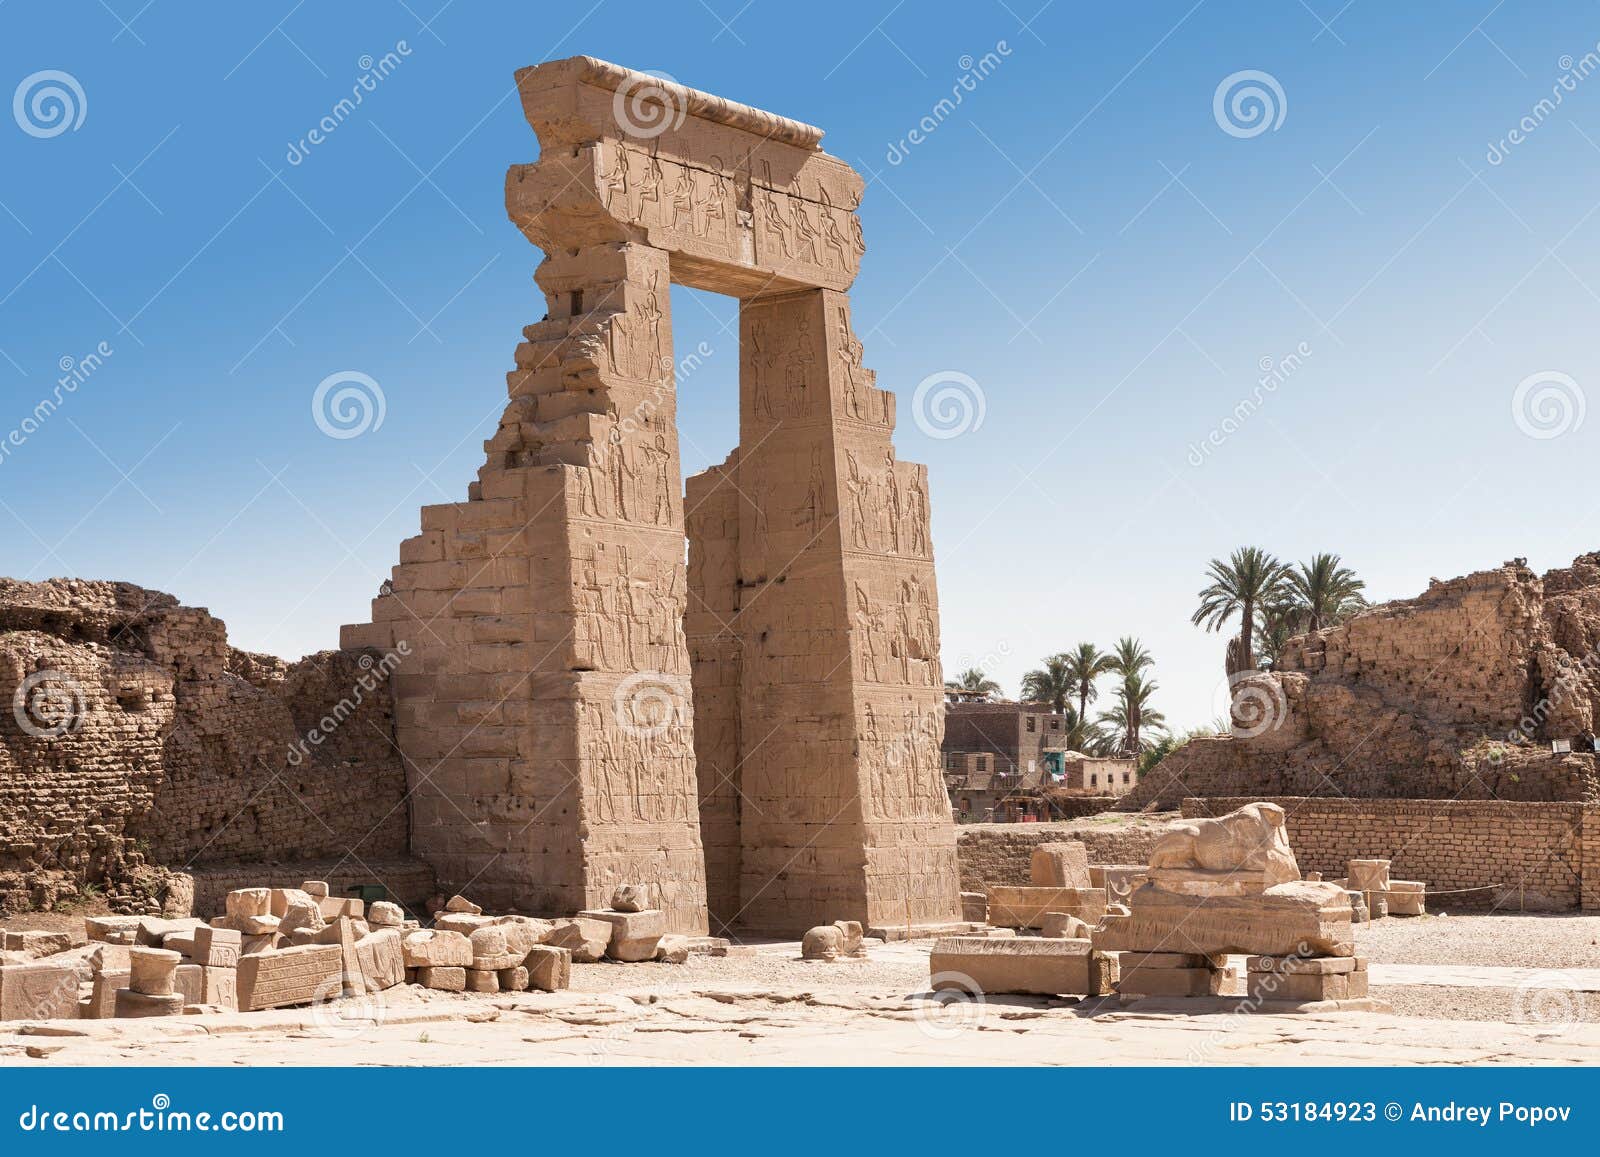 entrance of egyptian dendera temple